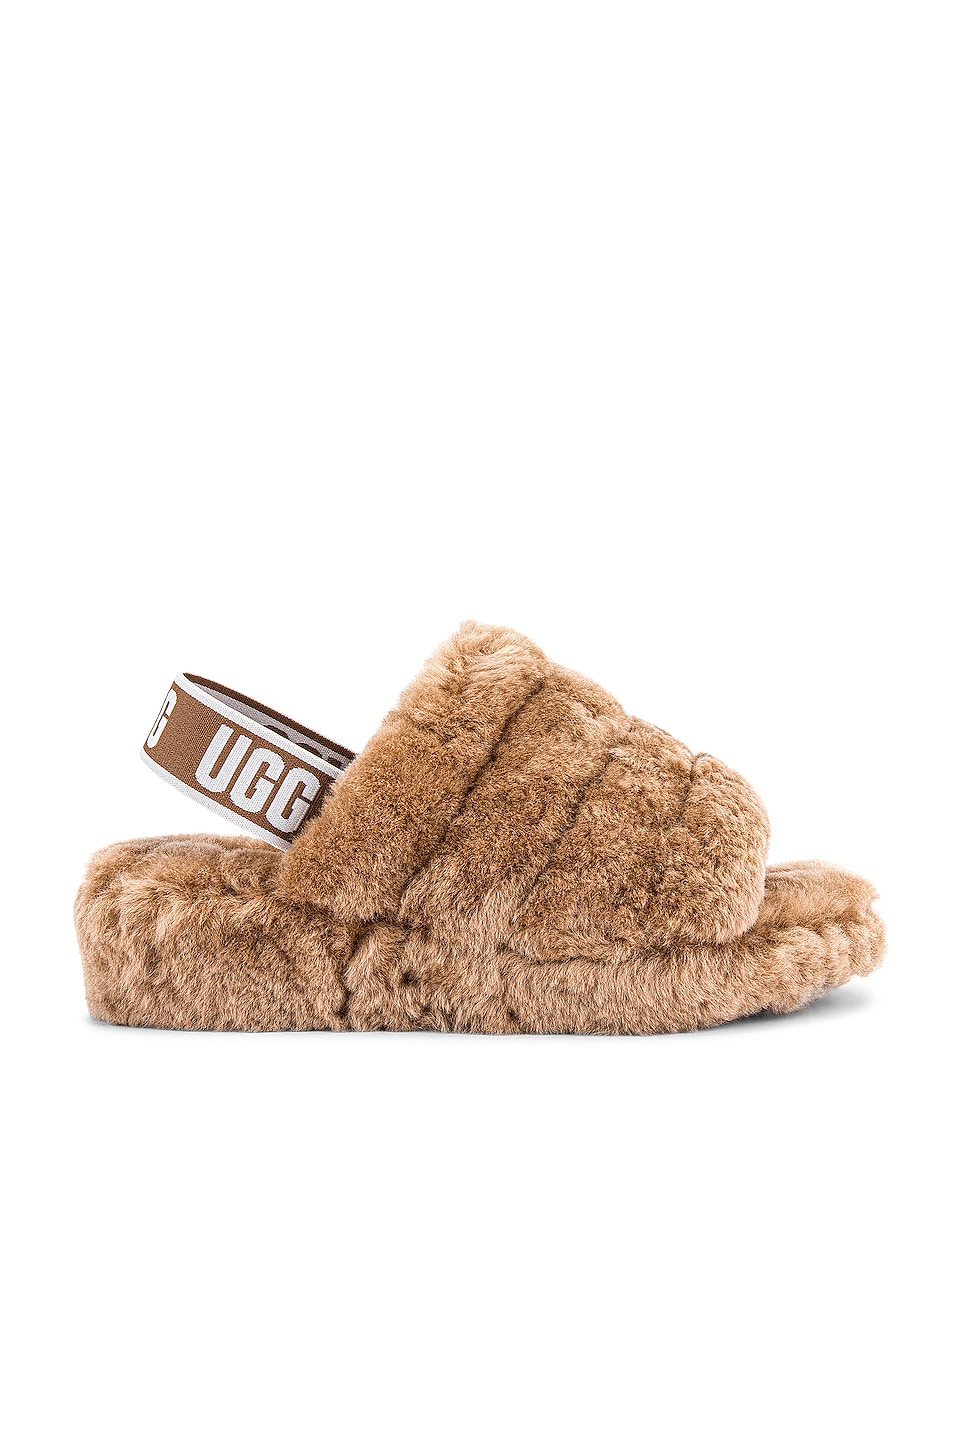 UGG Fluff Yeah Fur Sandal in Chestnut | REVOLVE